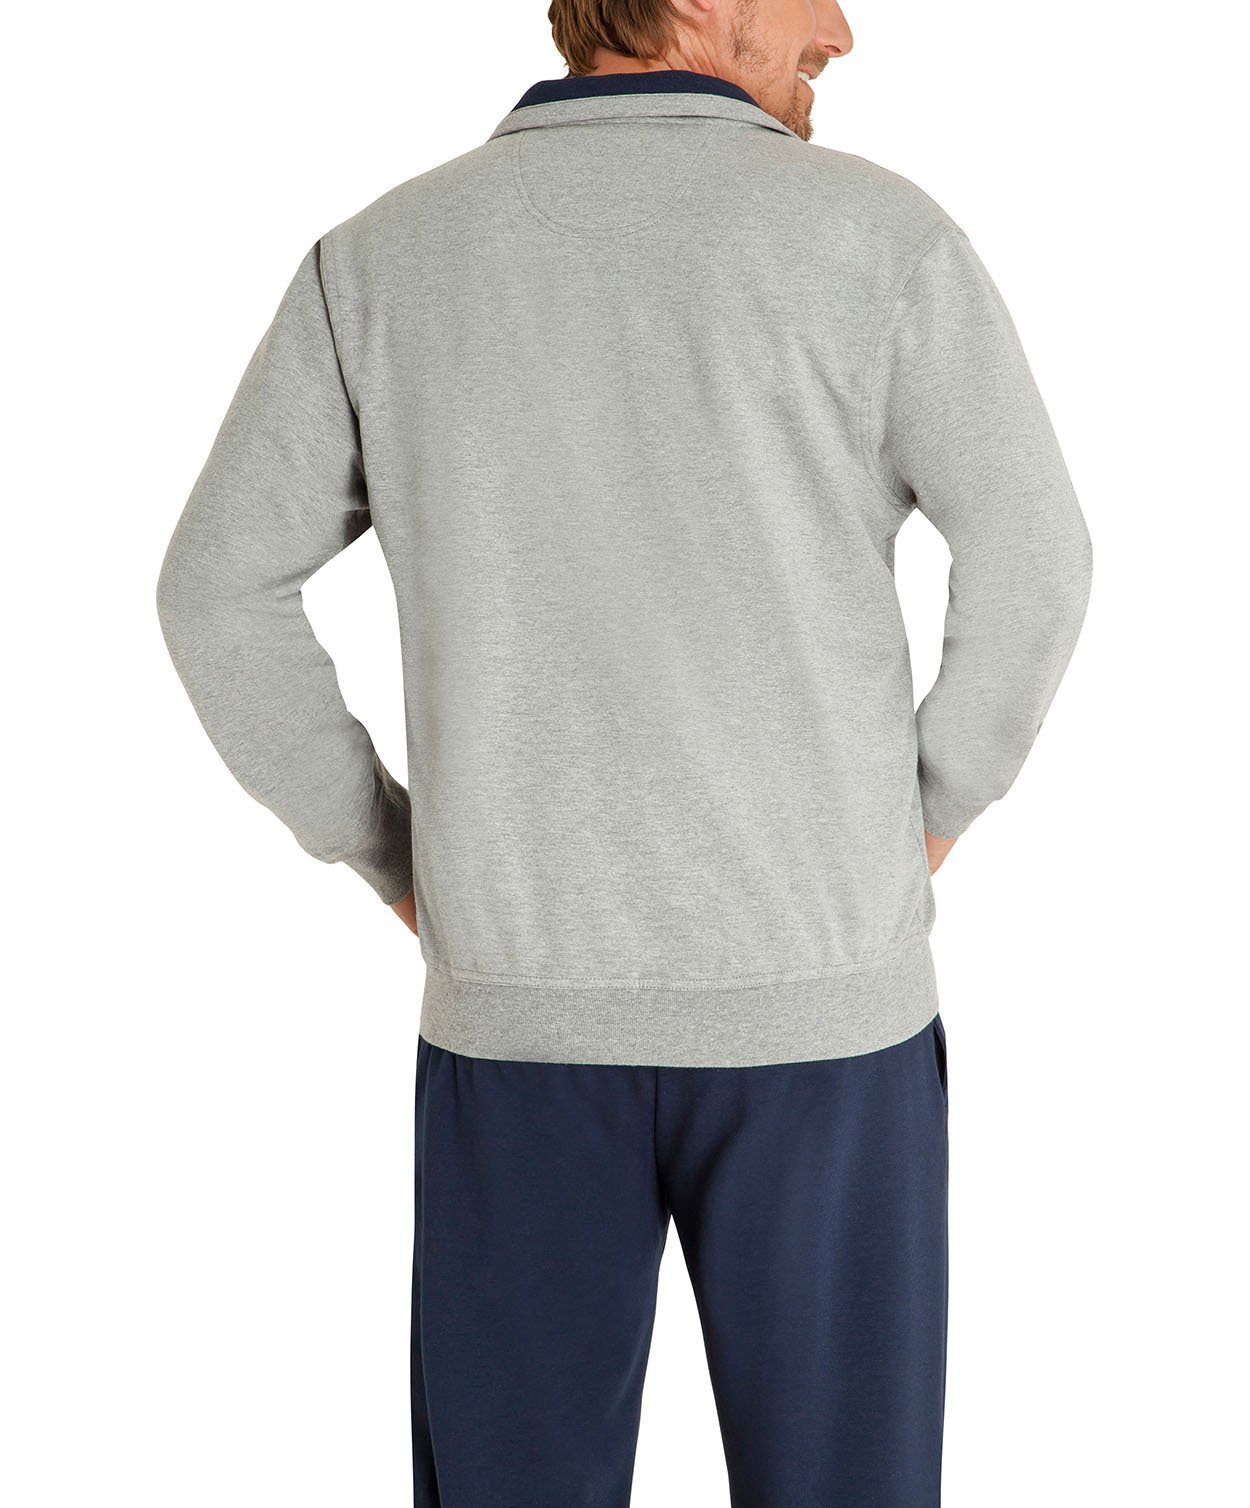 Hajo Sweatshirt Herren Homewear - Klima-Komfort Jacke Grau Freizeit